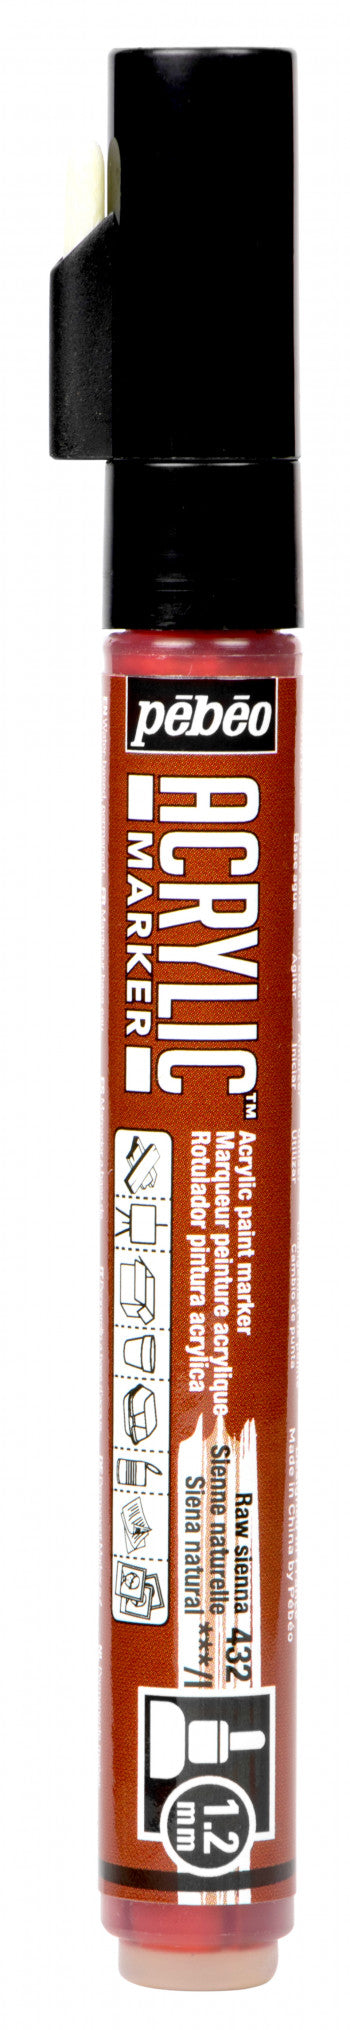 Acrylic Marker 1.2mm Pebeo   Sienne naturelle